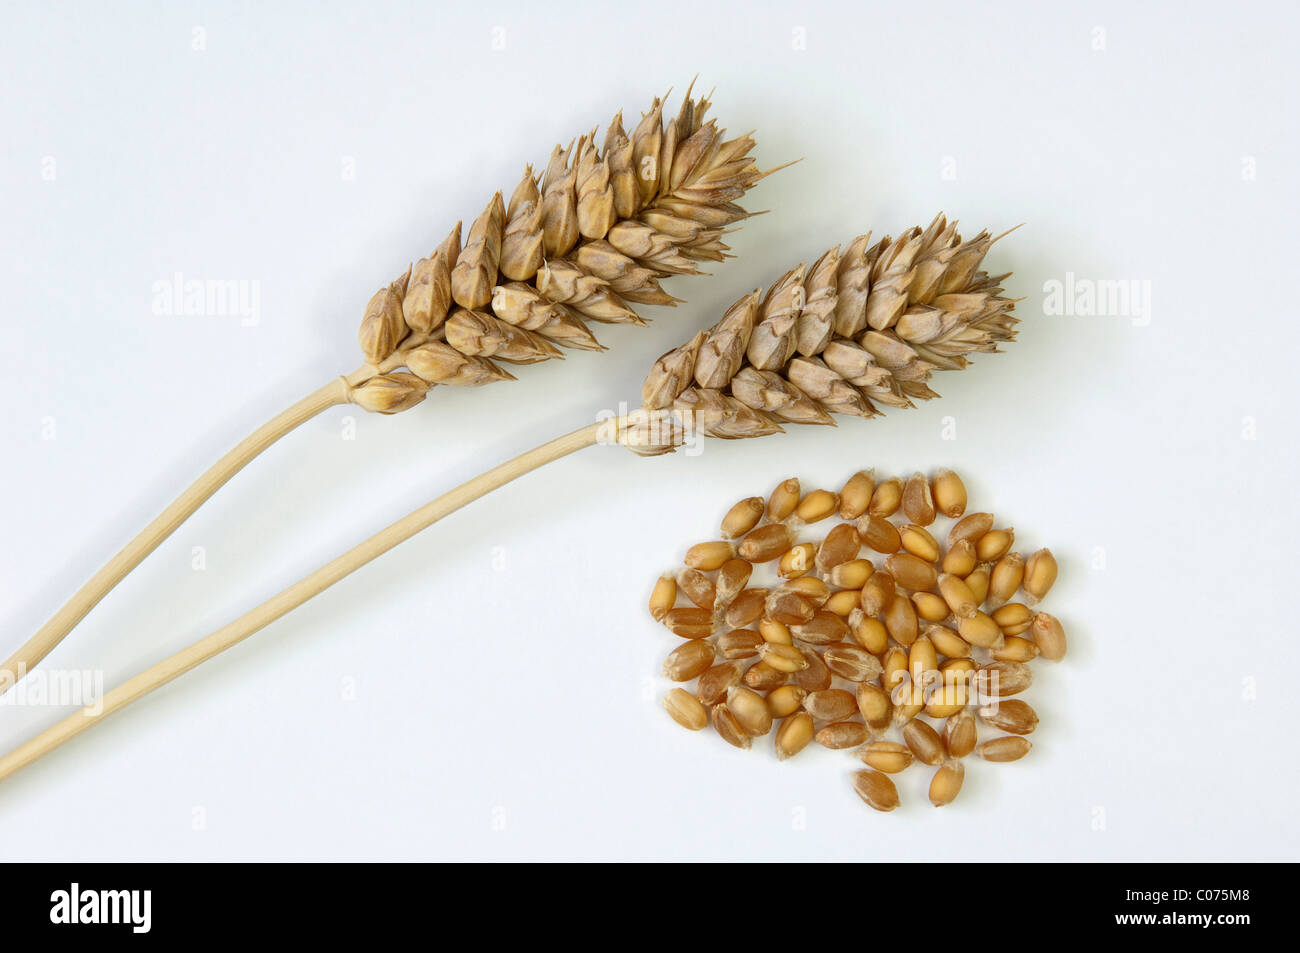 Common Wheat, Bread Wheat (Triticum aestivum), ripe ear and corns. Studio picture against a white background. Stock Photo